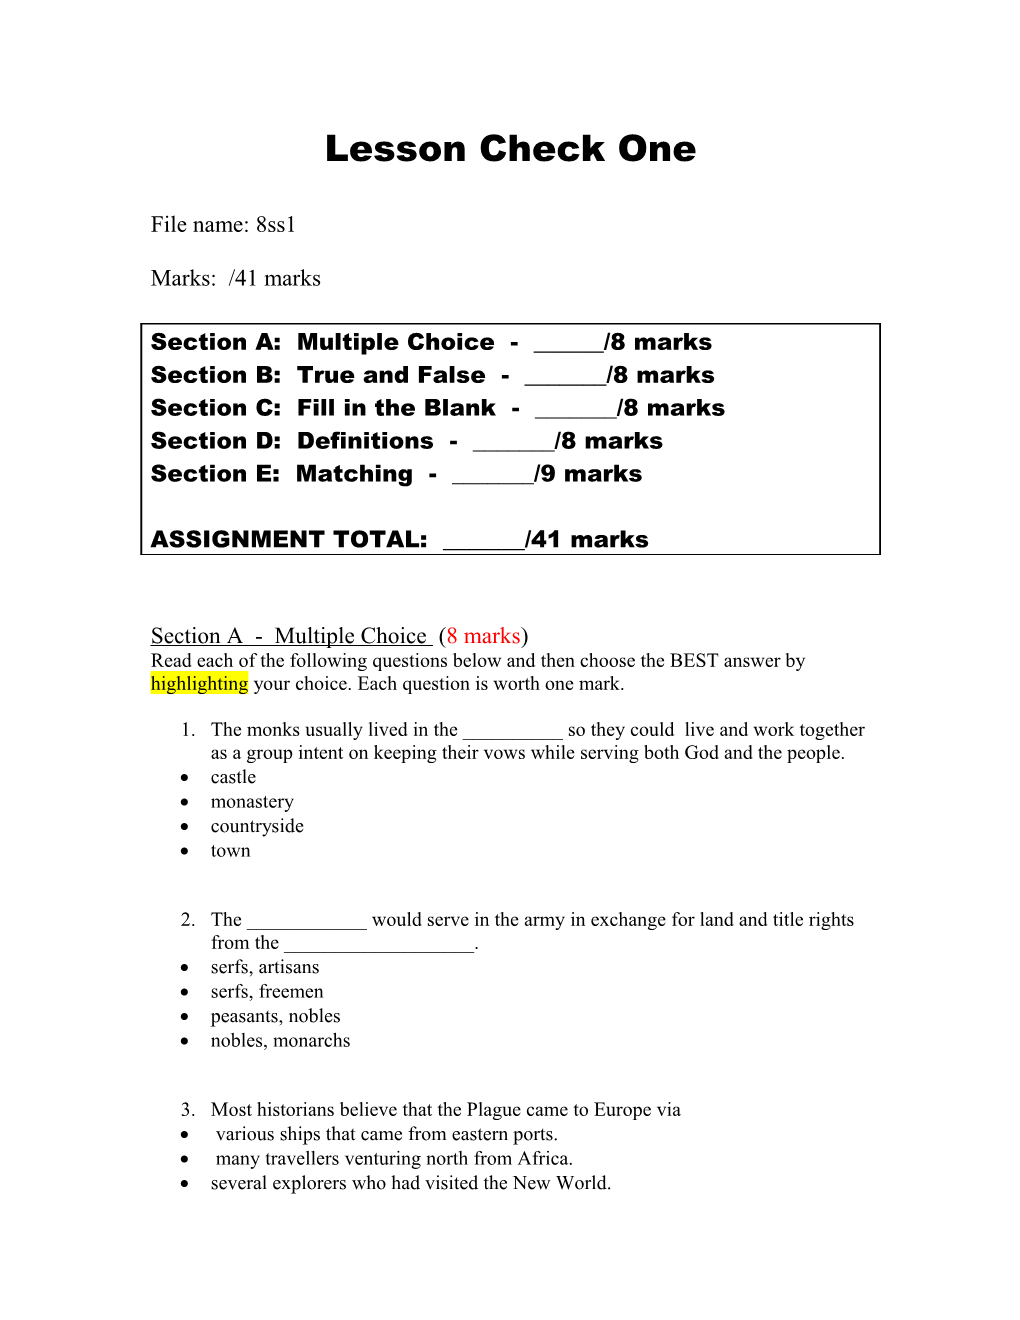 Section a - Multiple Choice (8 Marks)